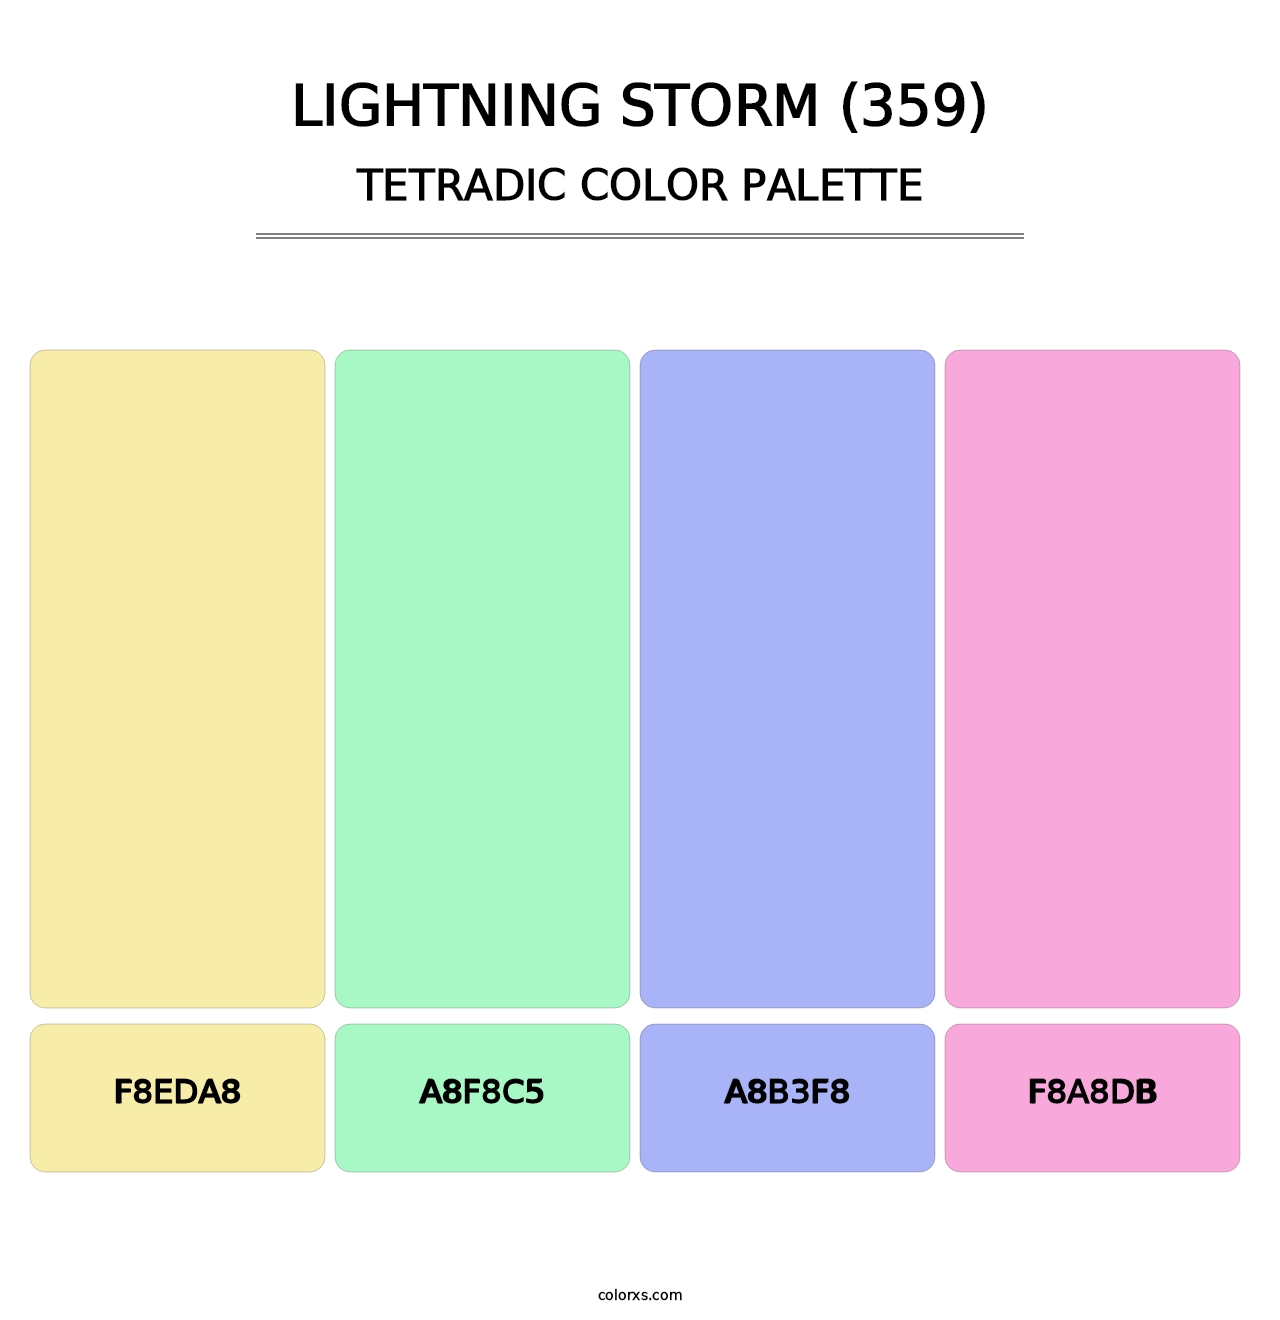 Lightning Storm (359) - Tetradic Color Palette